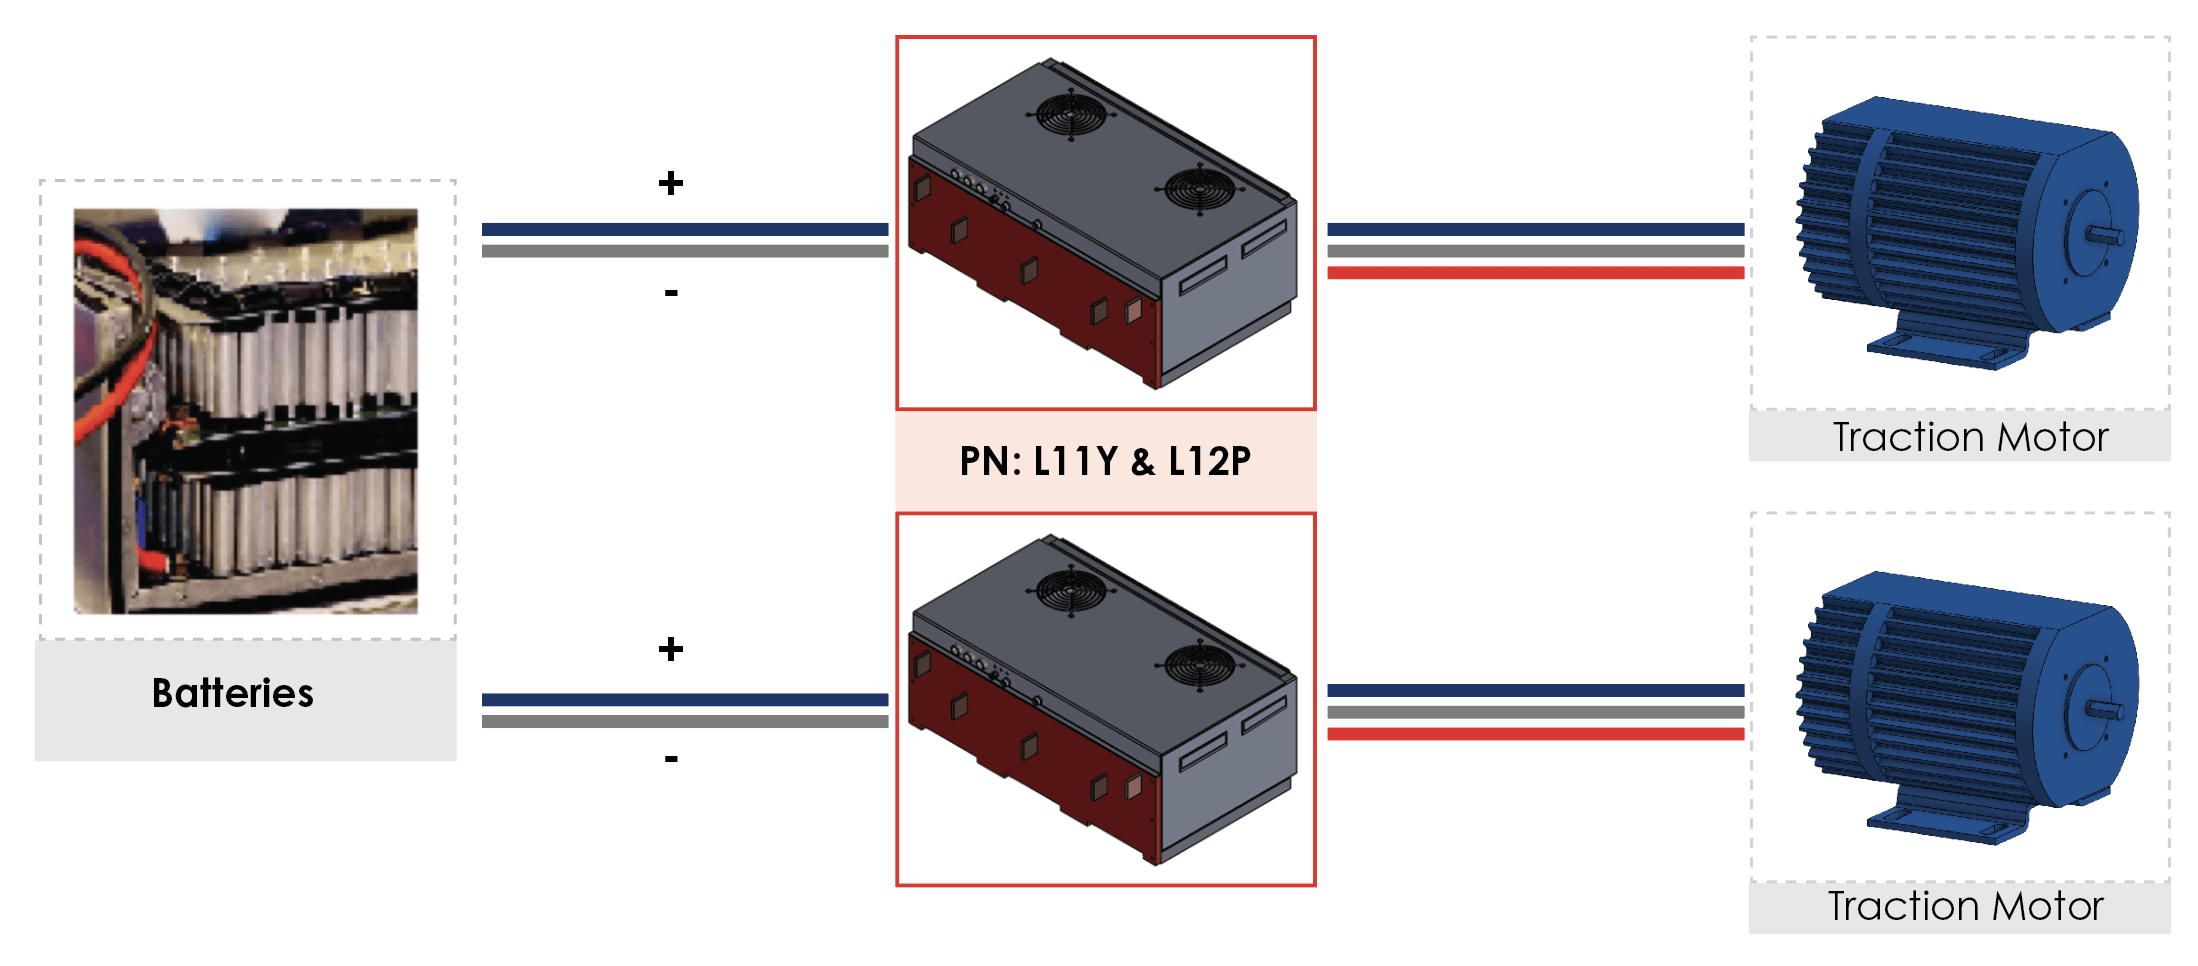 Groupe électrogène Inverter Unicraft PG-I 21 SR-S - Optimachines